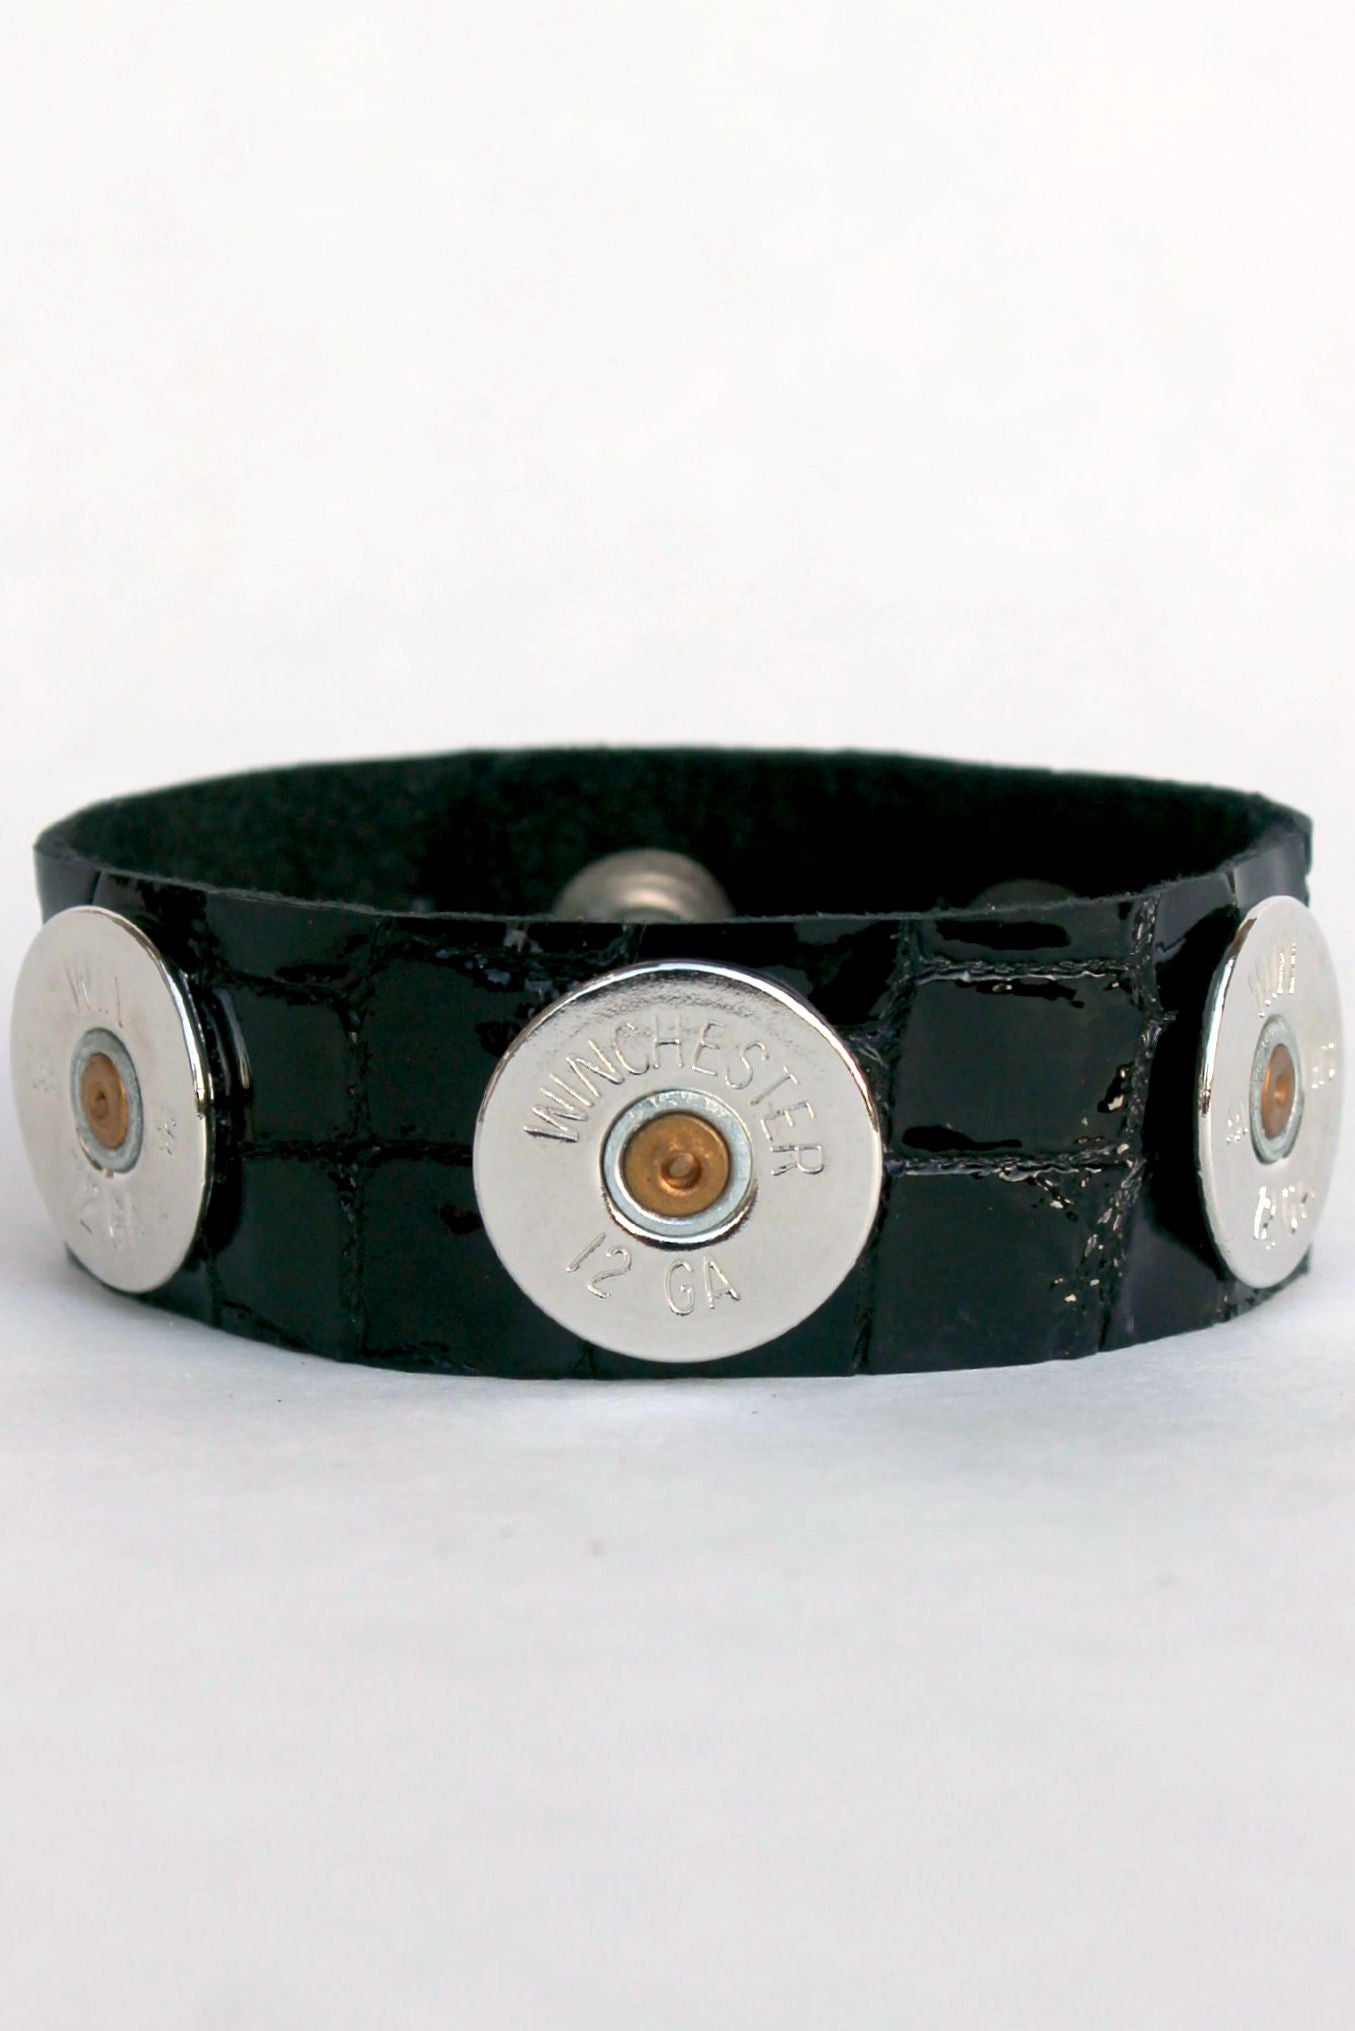 Lizzy J's Shotgun Shell Bracelet, Black